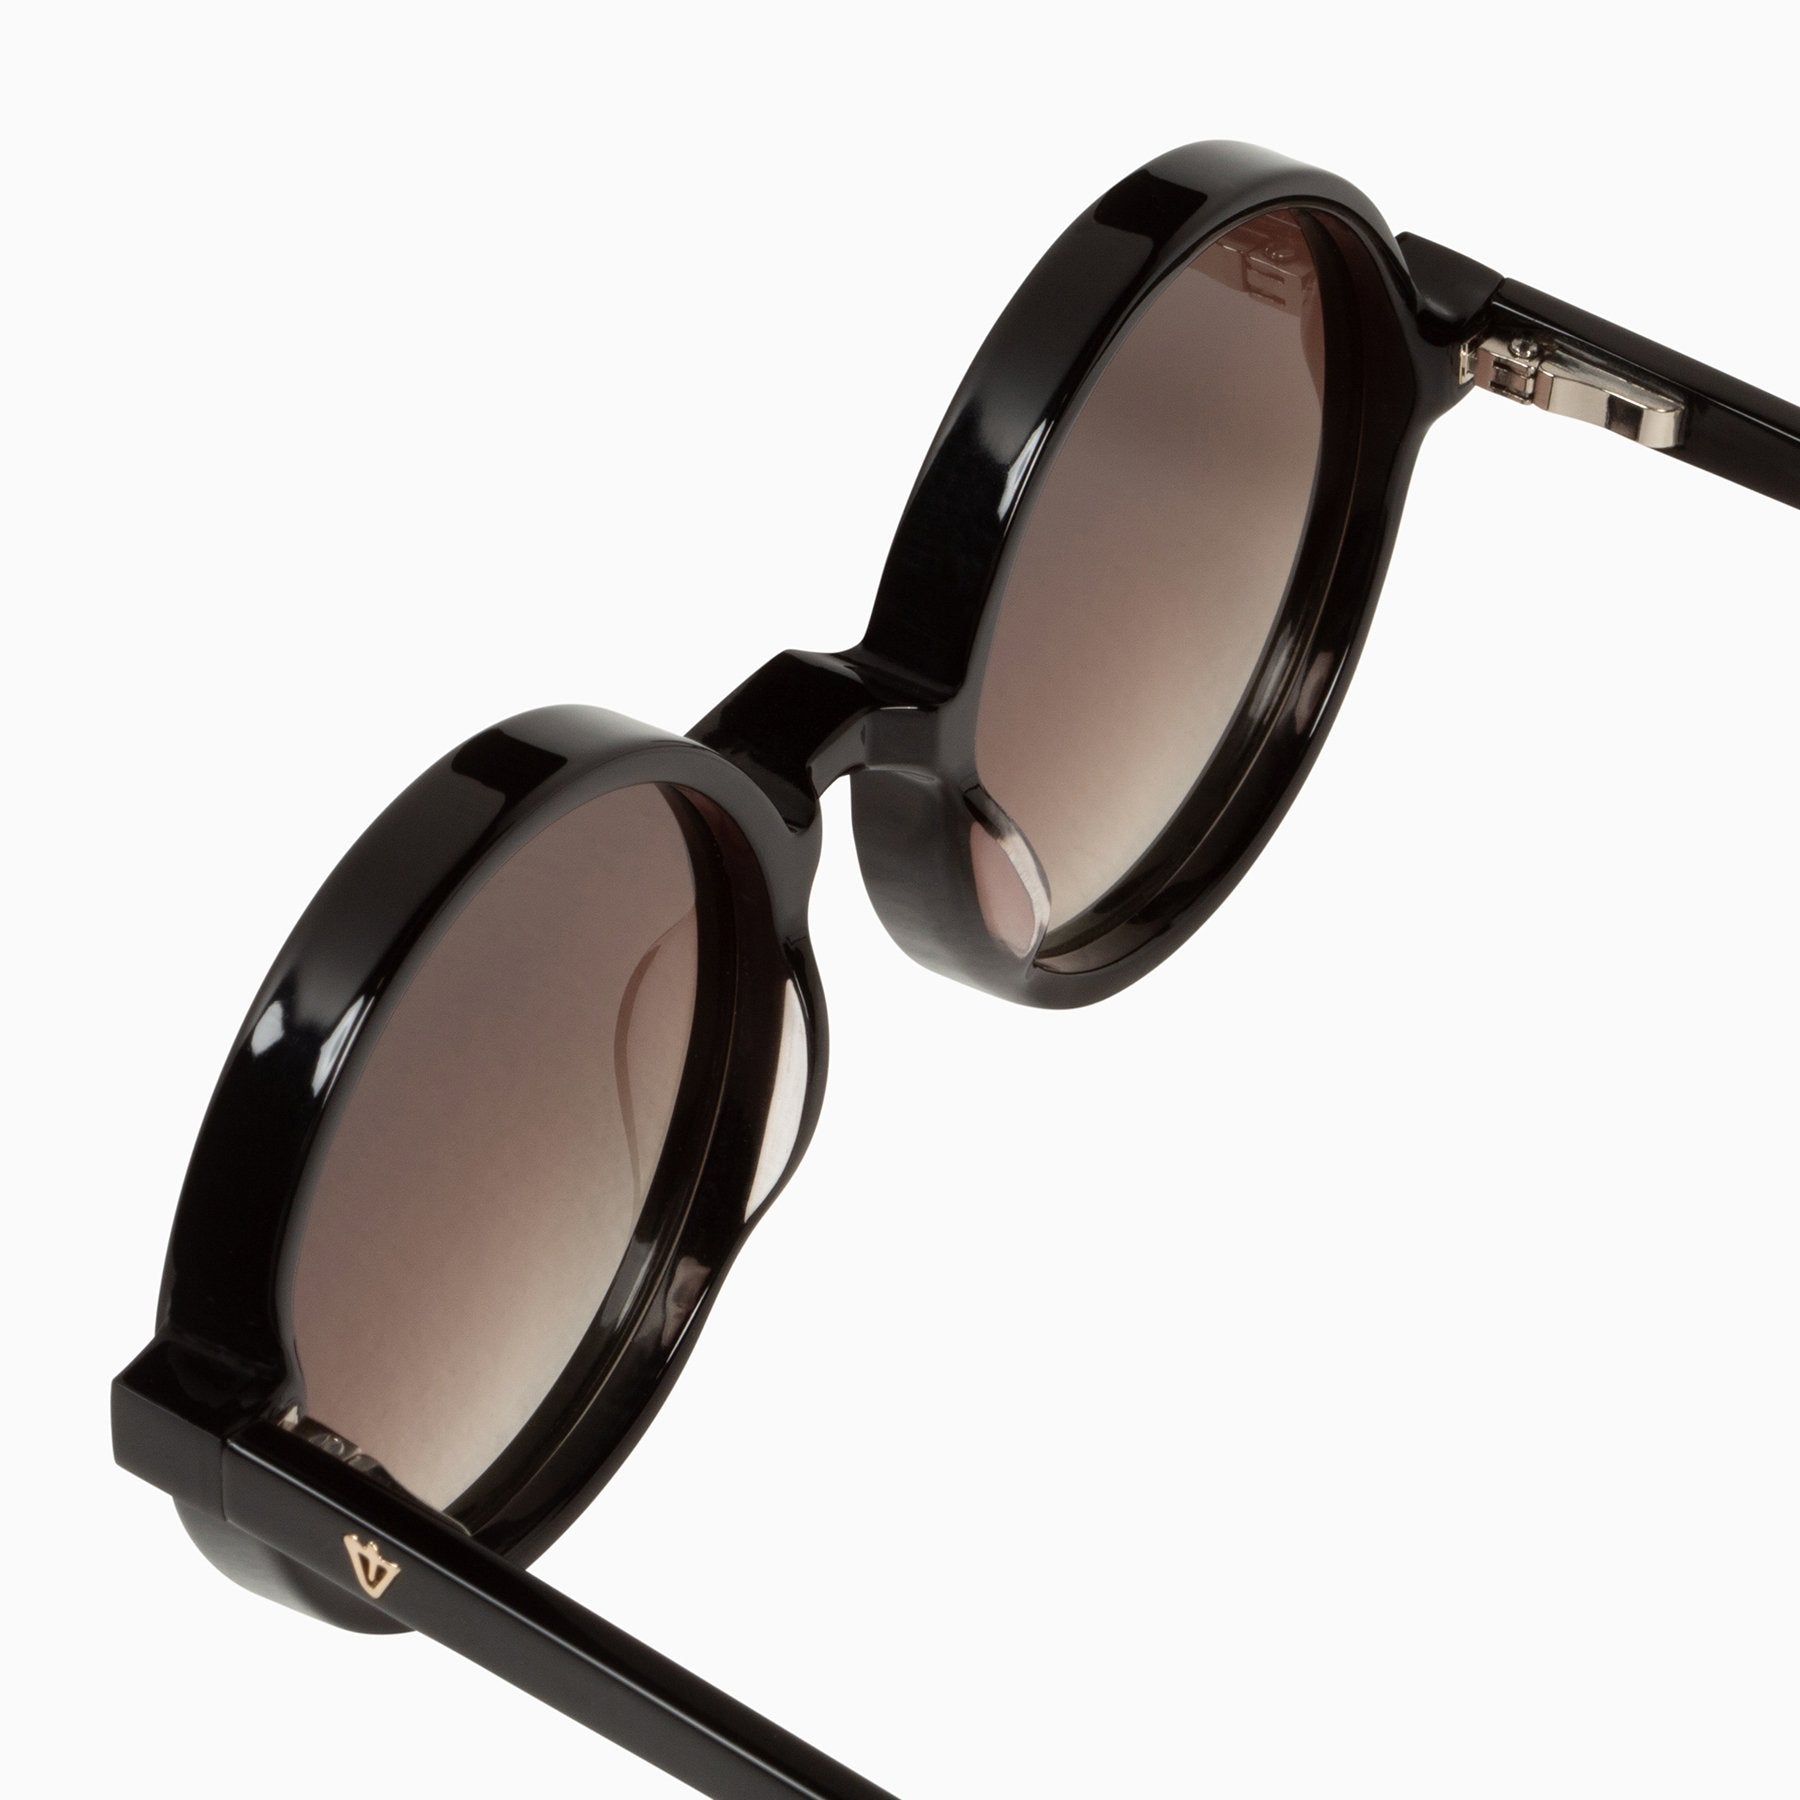 Prospect | Sunglasses - Gloss Black / Brown Gradient Lens